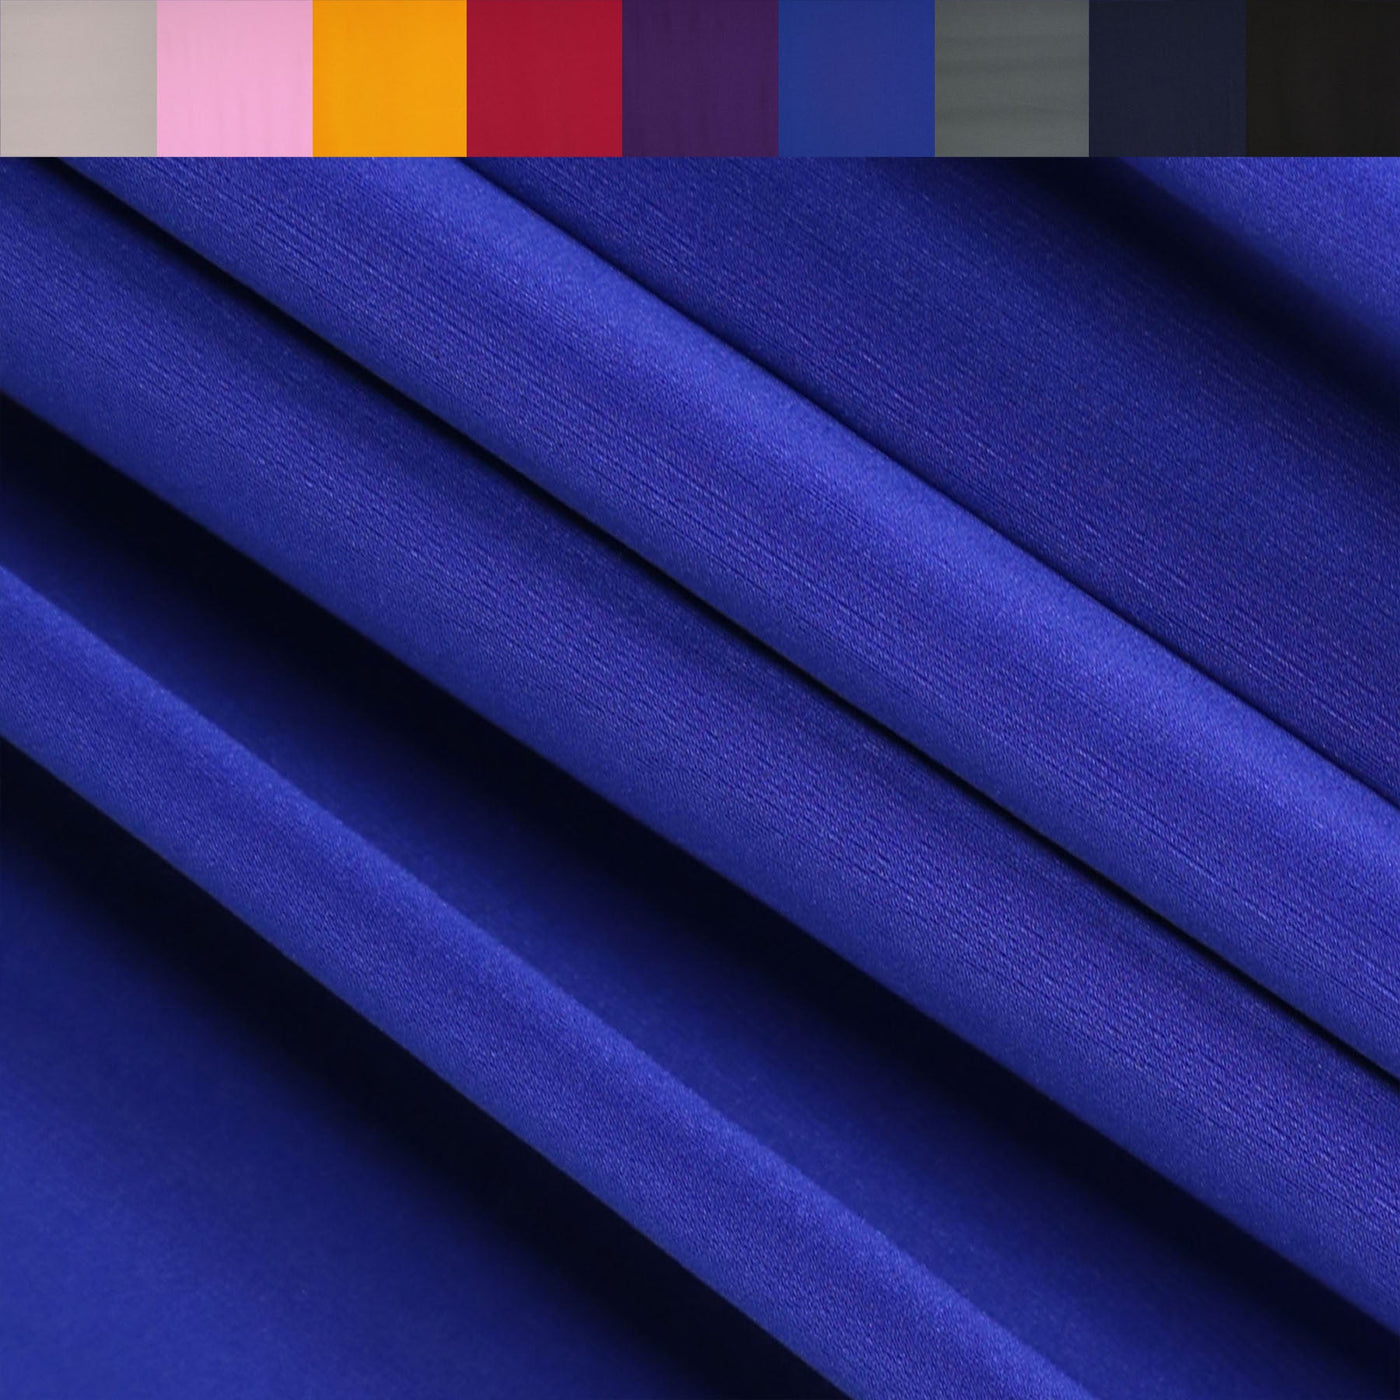 ITY Polyester Spandex Fabric | Royal Blue | Shop FabricLA.com